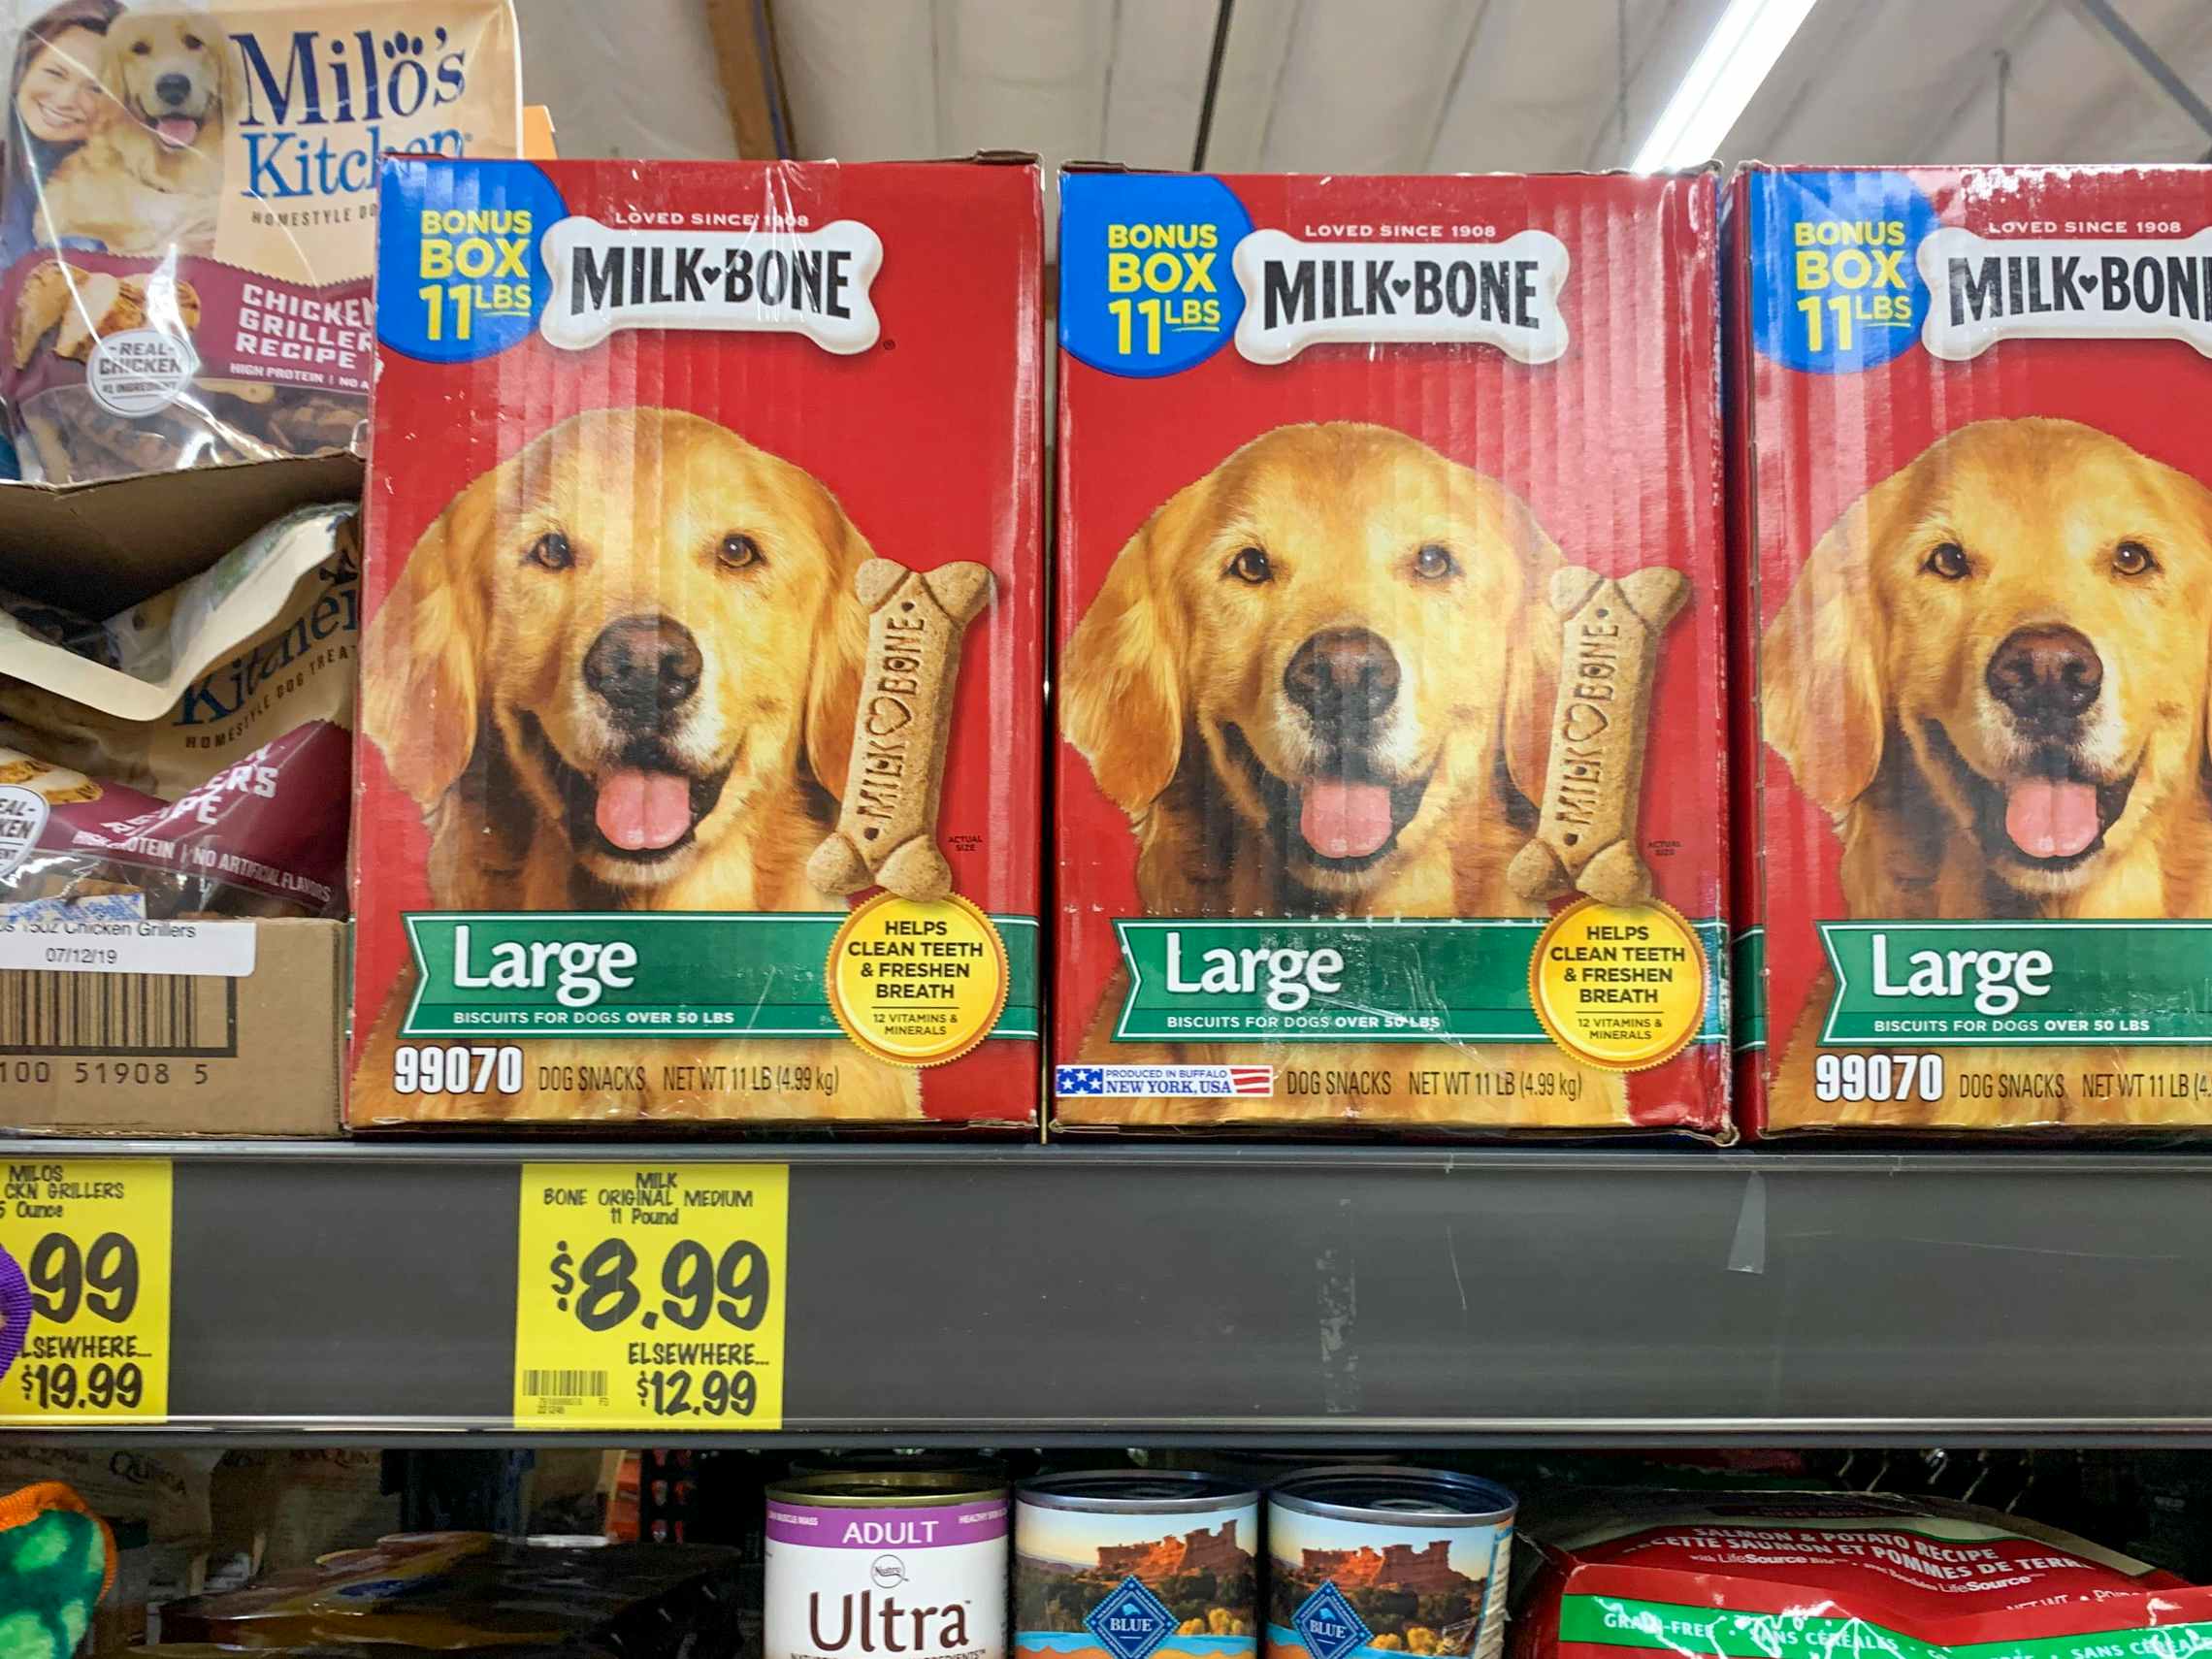 Boxes of Milk Bone dog treats on a shelf